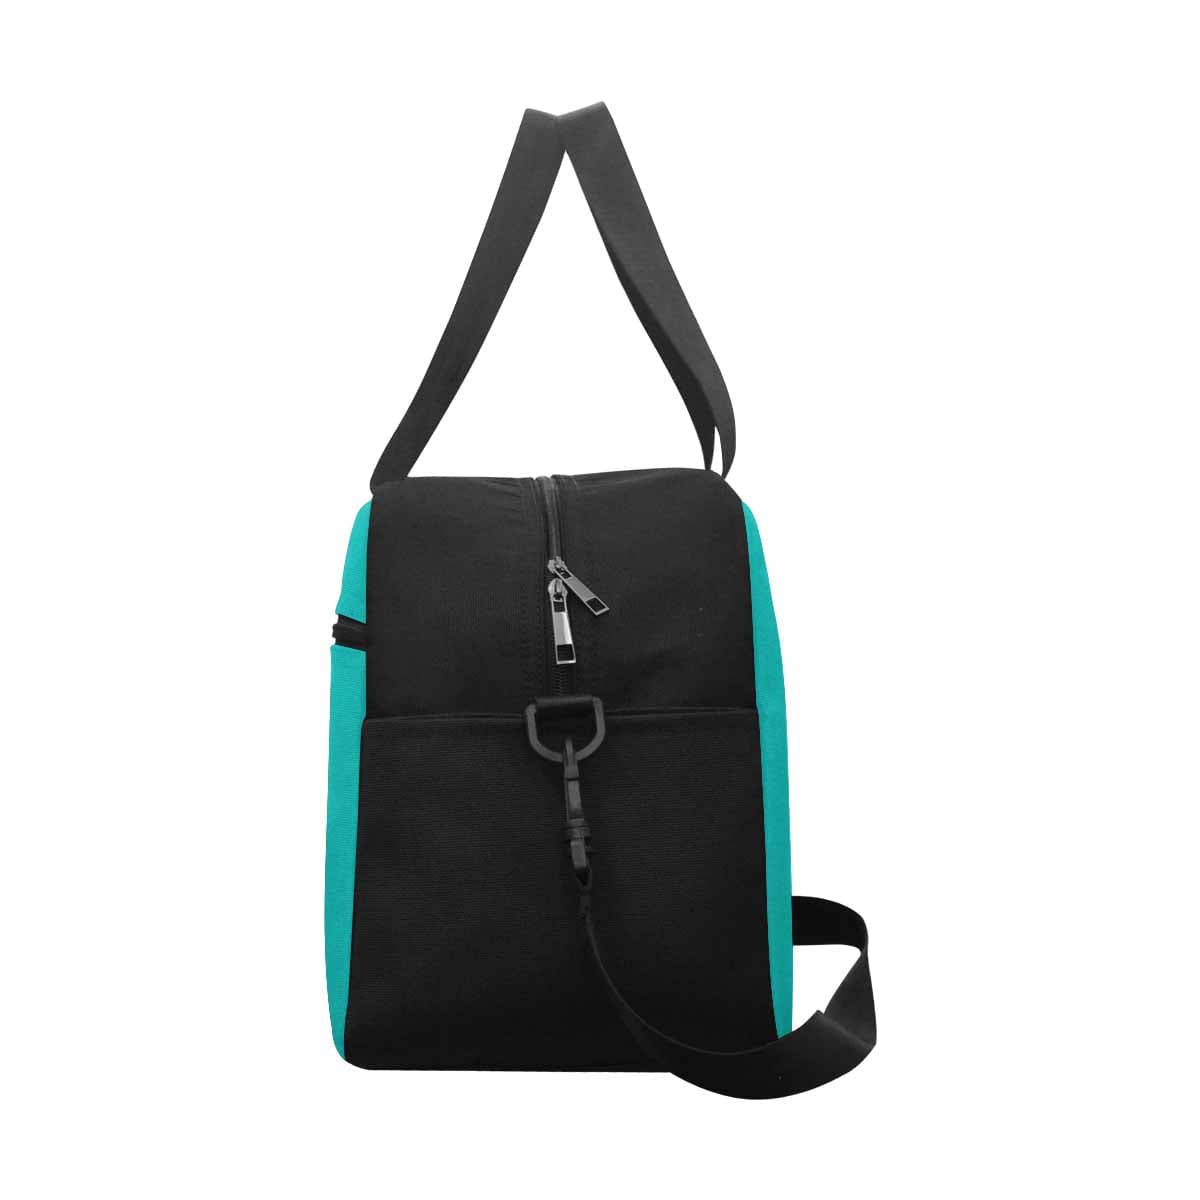 Greenish Blue Tote And Crossbody Travel Bag - Bags | Travel Bags | Crossbody